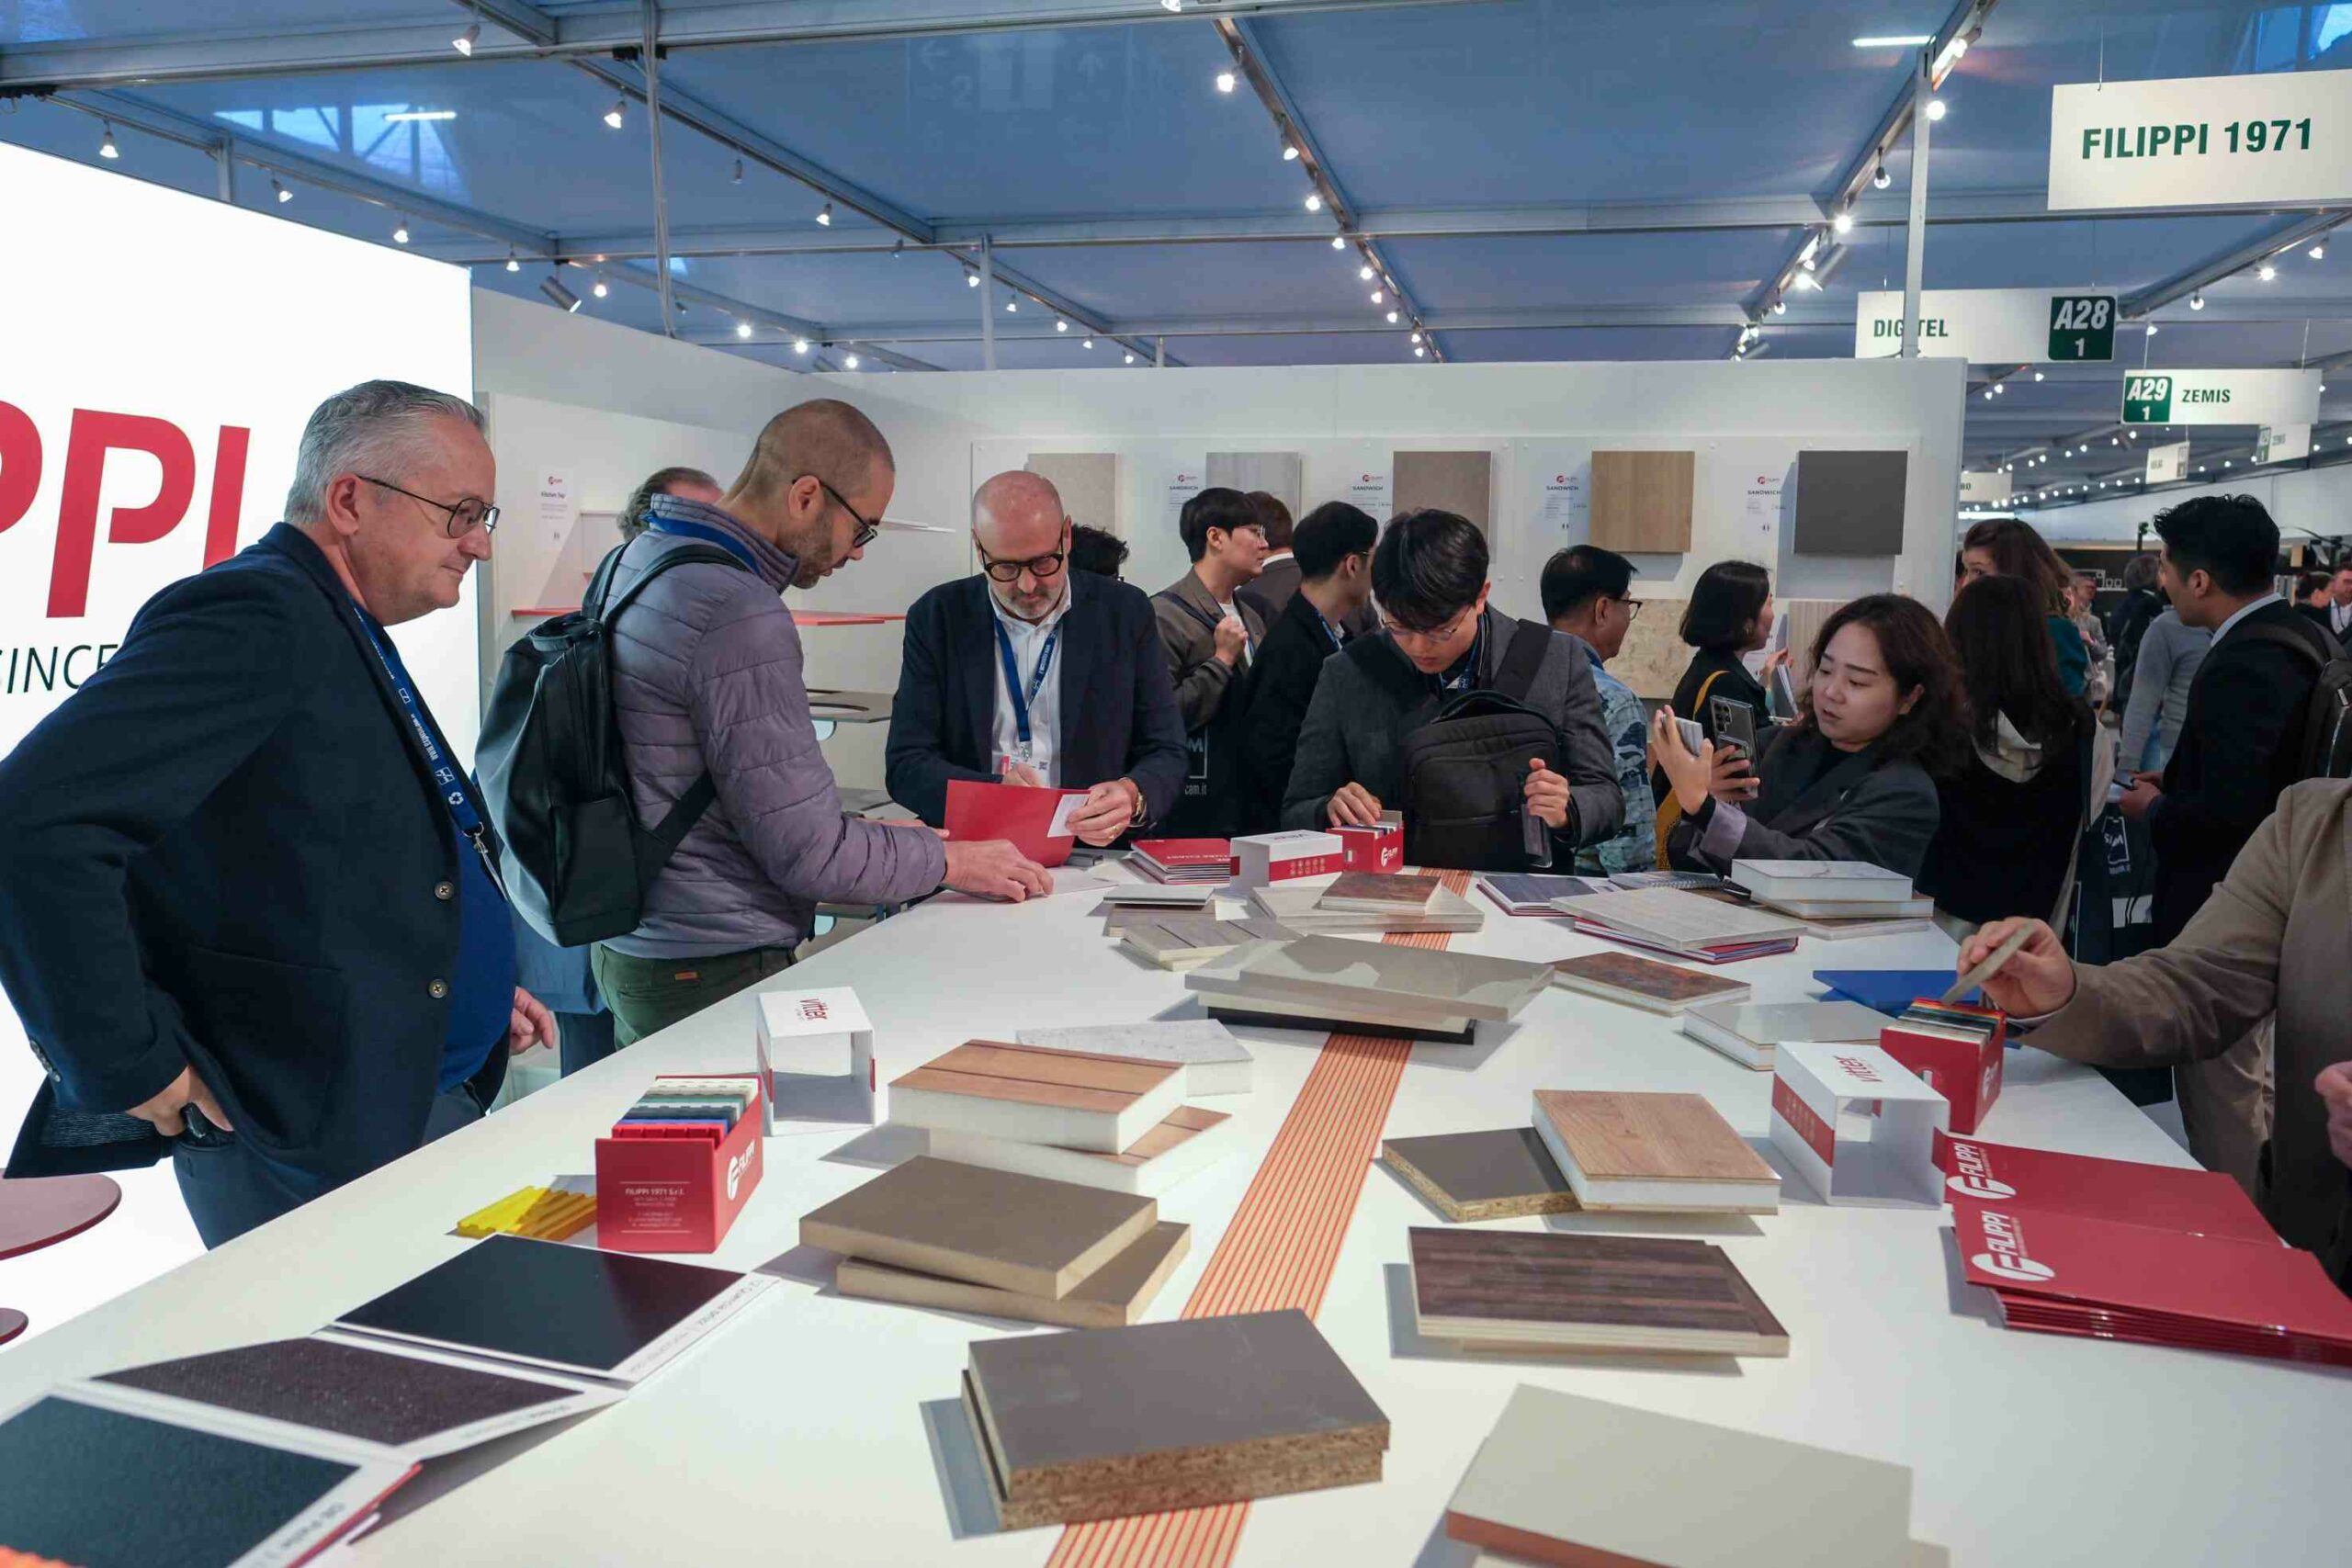 a crowd gathered around a white table examining samples at SICAM Pordenone furniture fair 2023